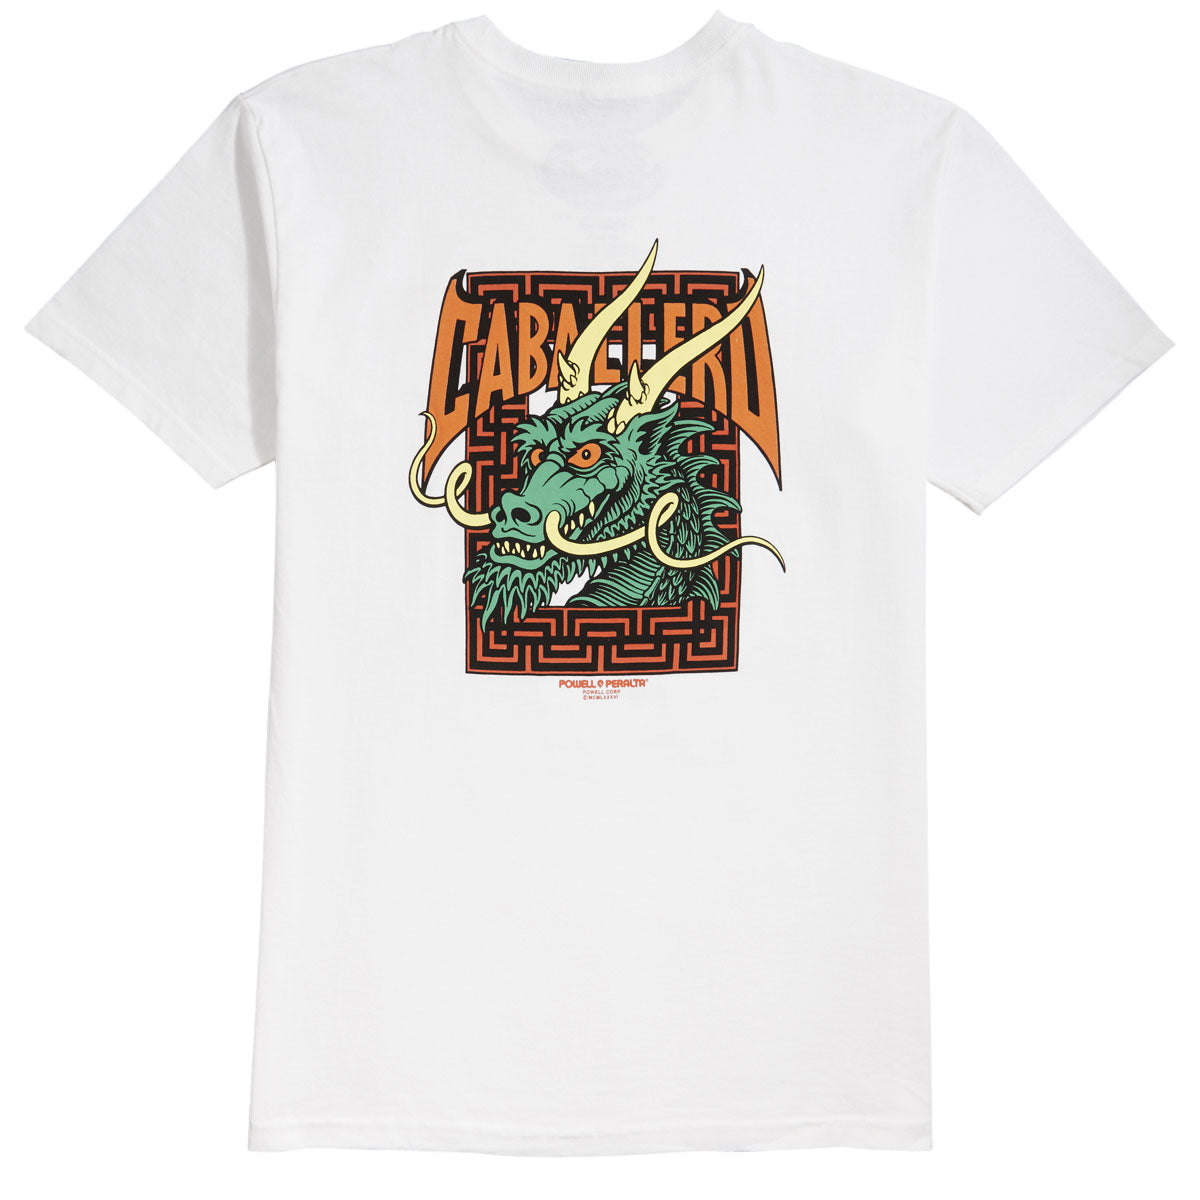 Powell-Peralta Caballero Street Dragon T-Shirt - White image 1